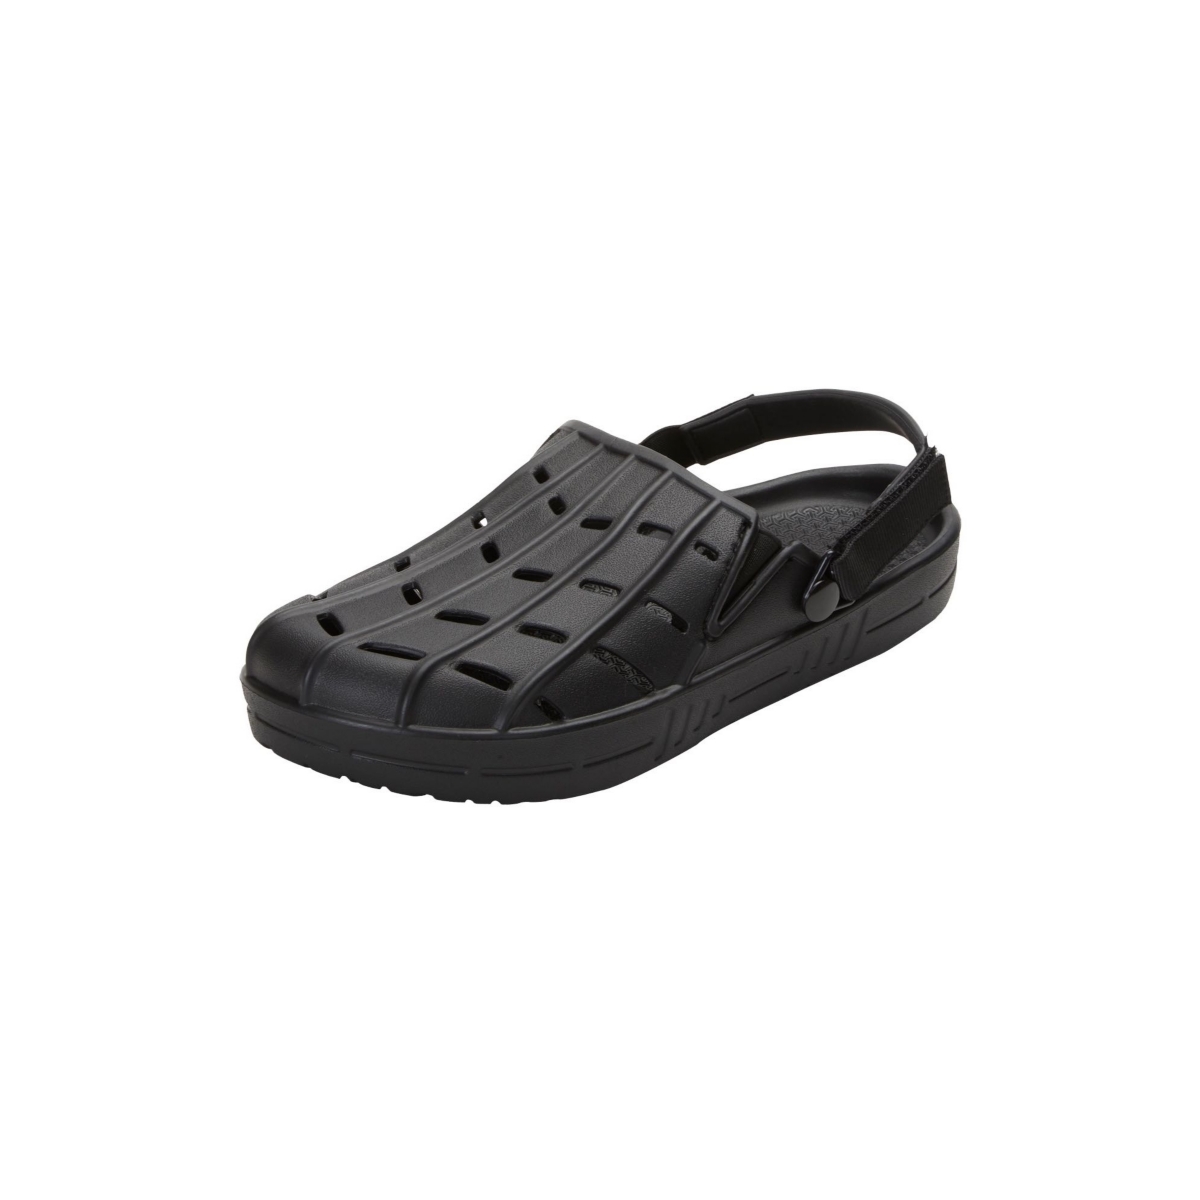 Men's Rubber Clog Water Shoe - Black